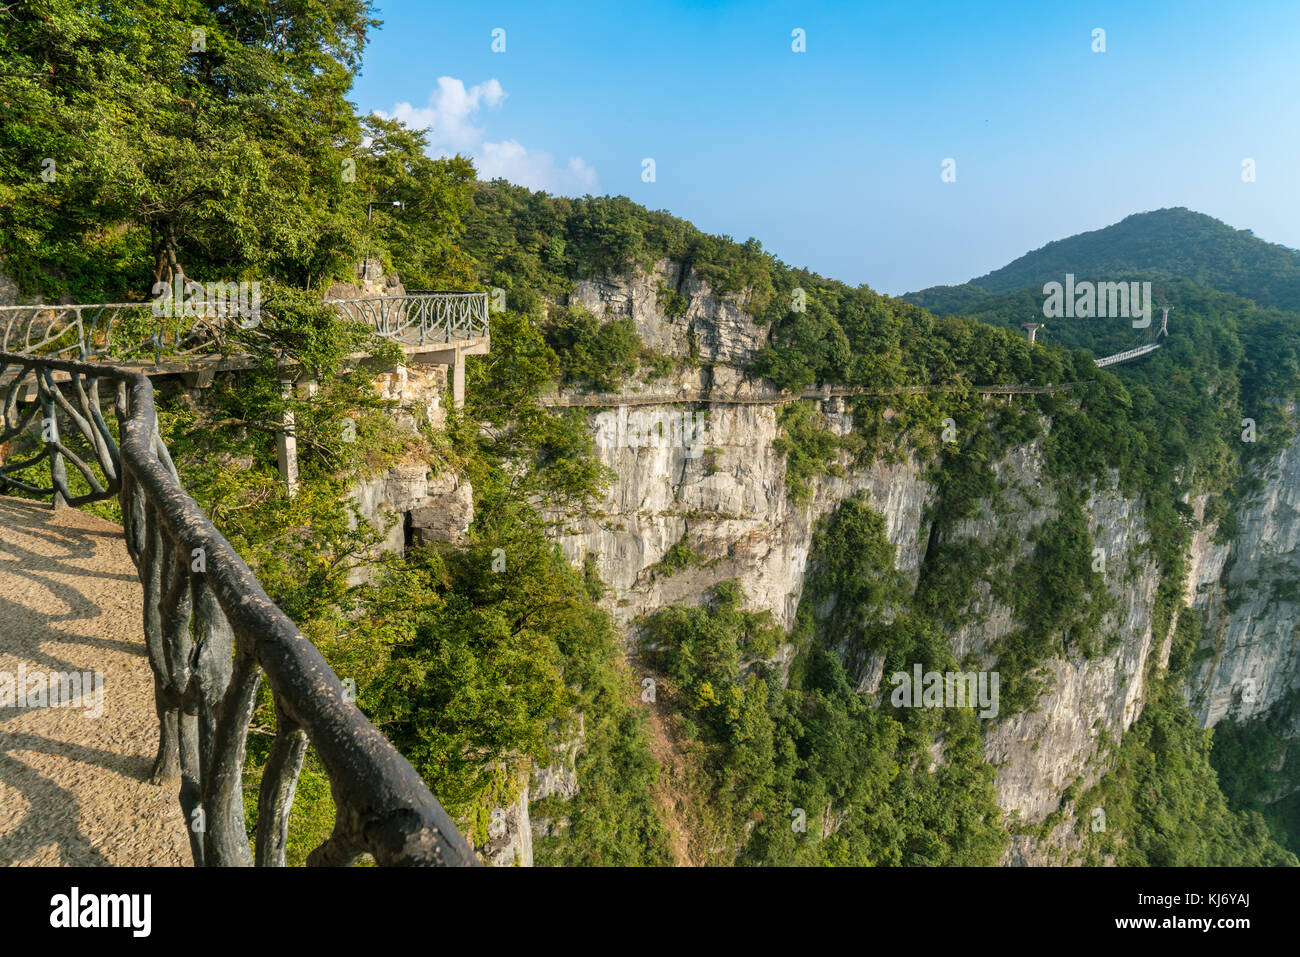 Wanderweg am Rande der steilen Klippe in tianmen Mountain, Niagara-on-the-Lake, Provinz Hunan, China Stockfoto